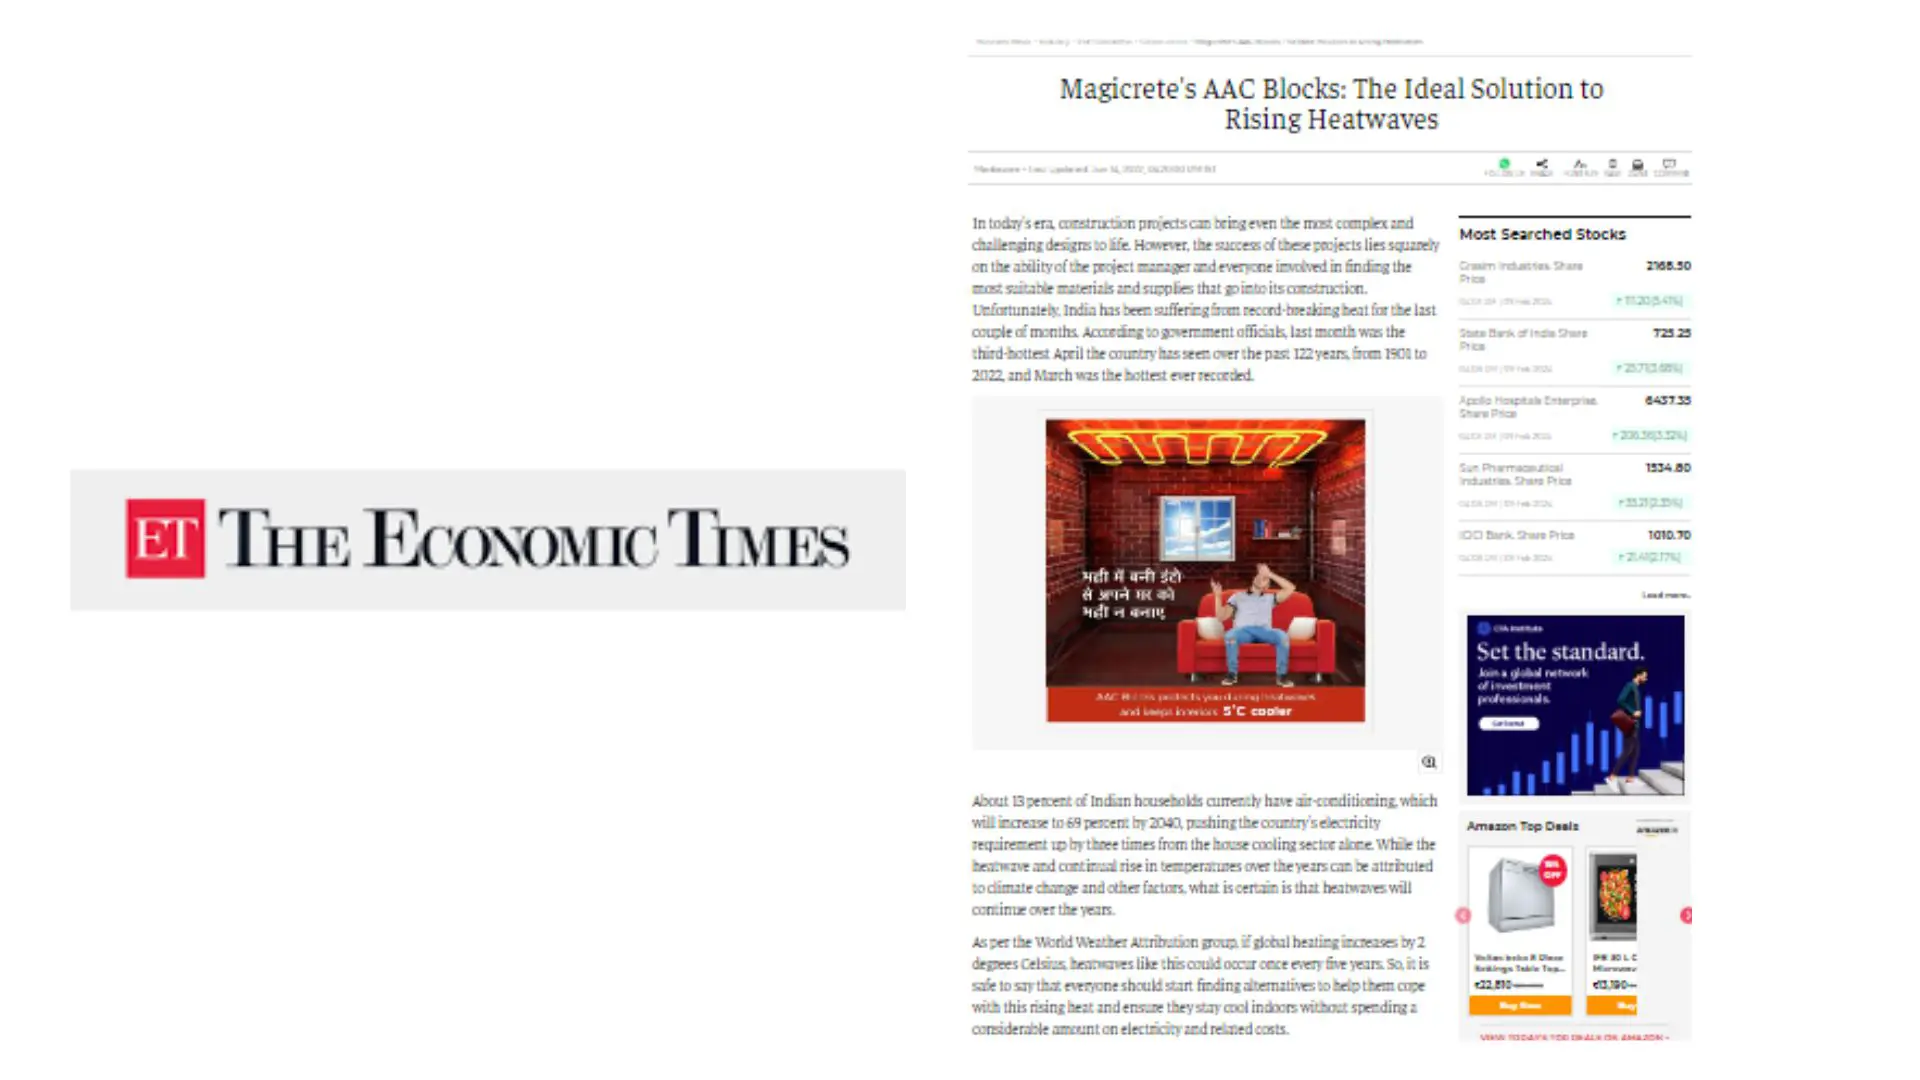 The Economic Times (AAC Blocks)